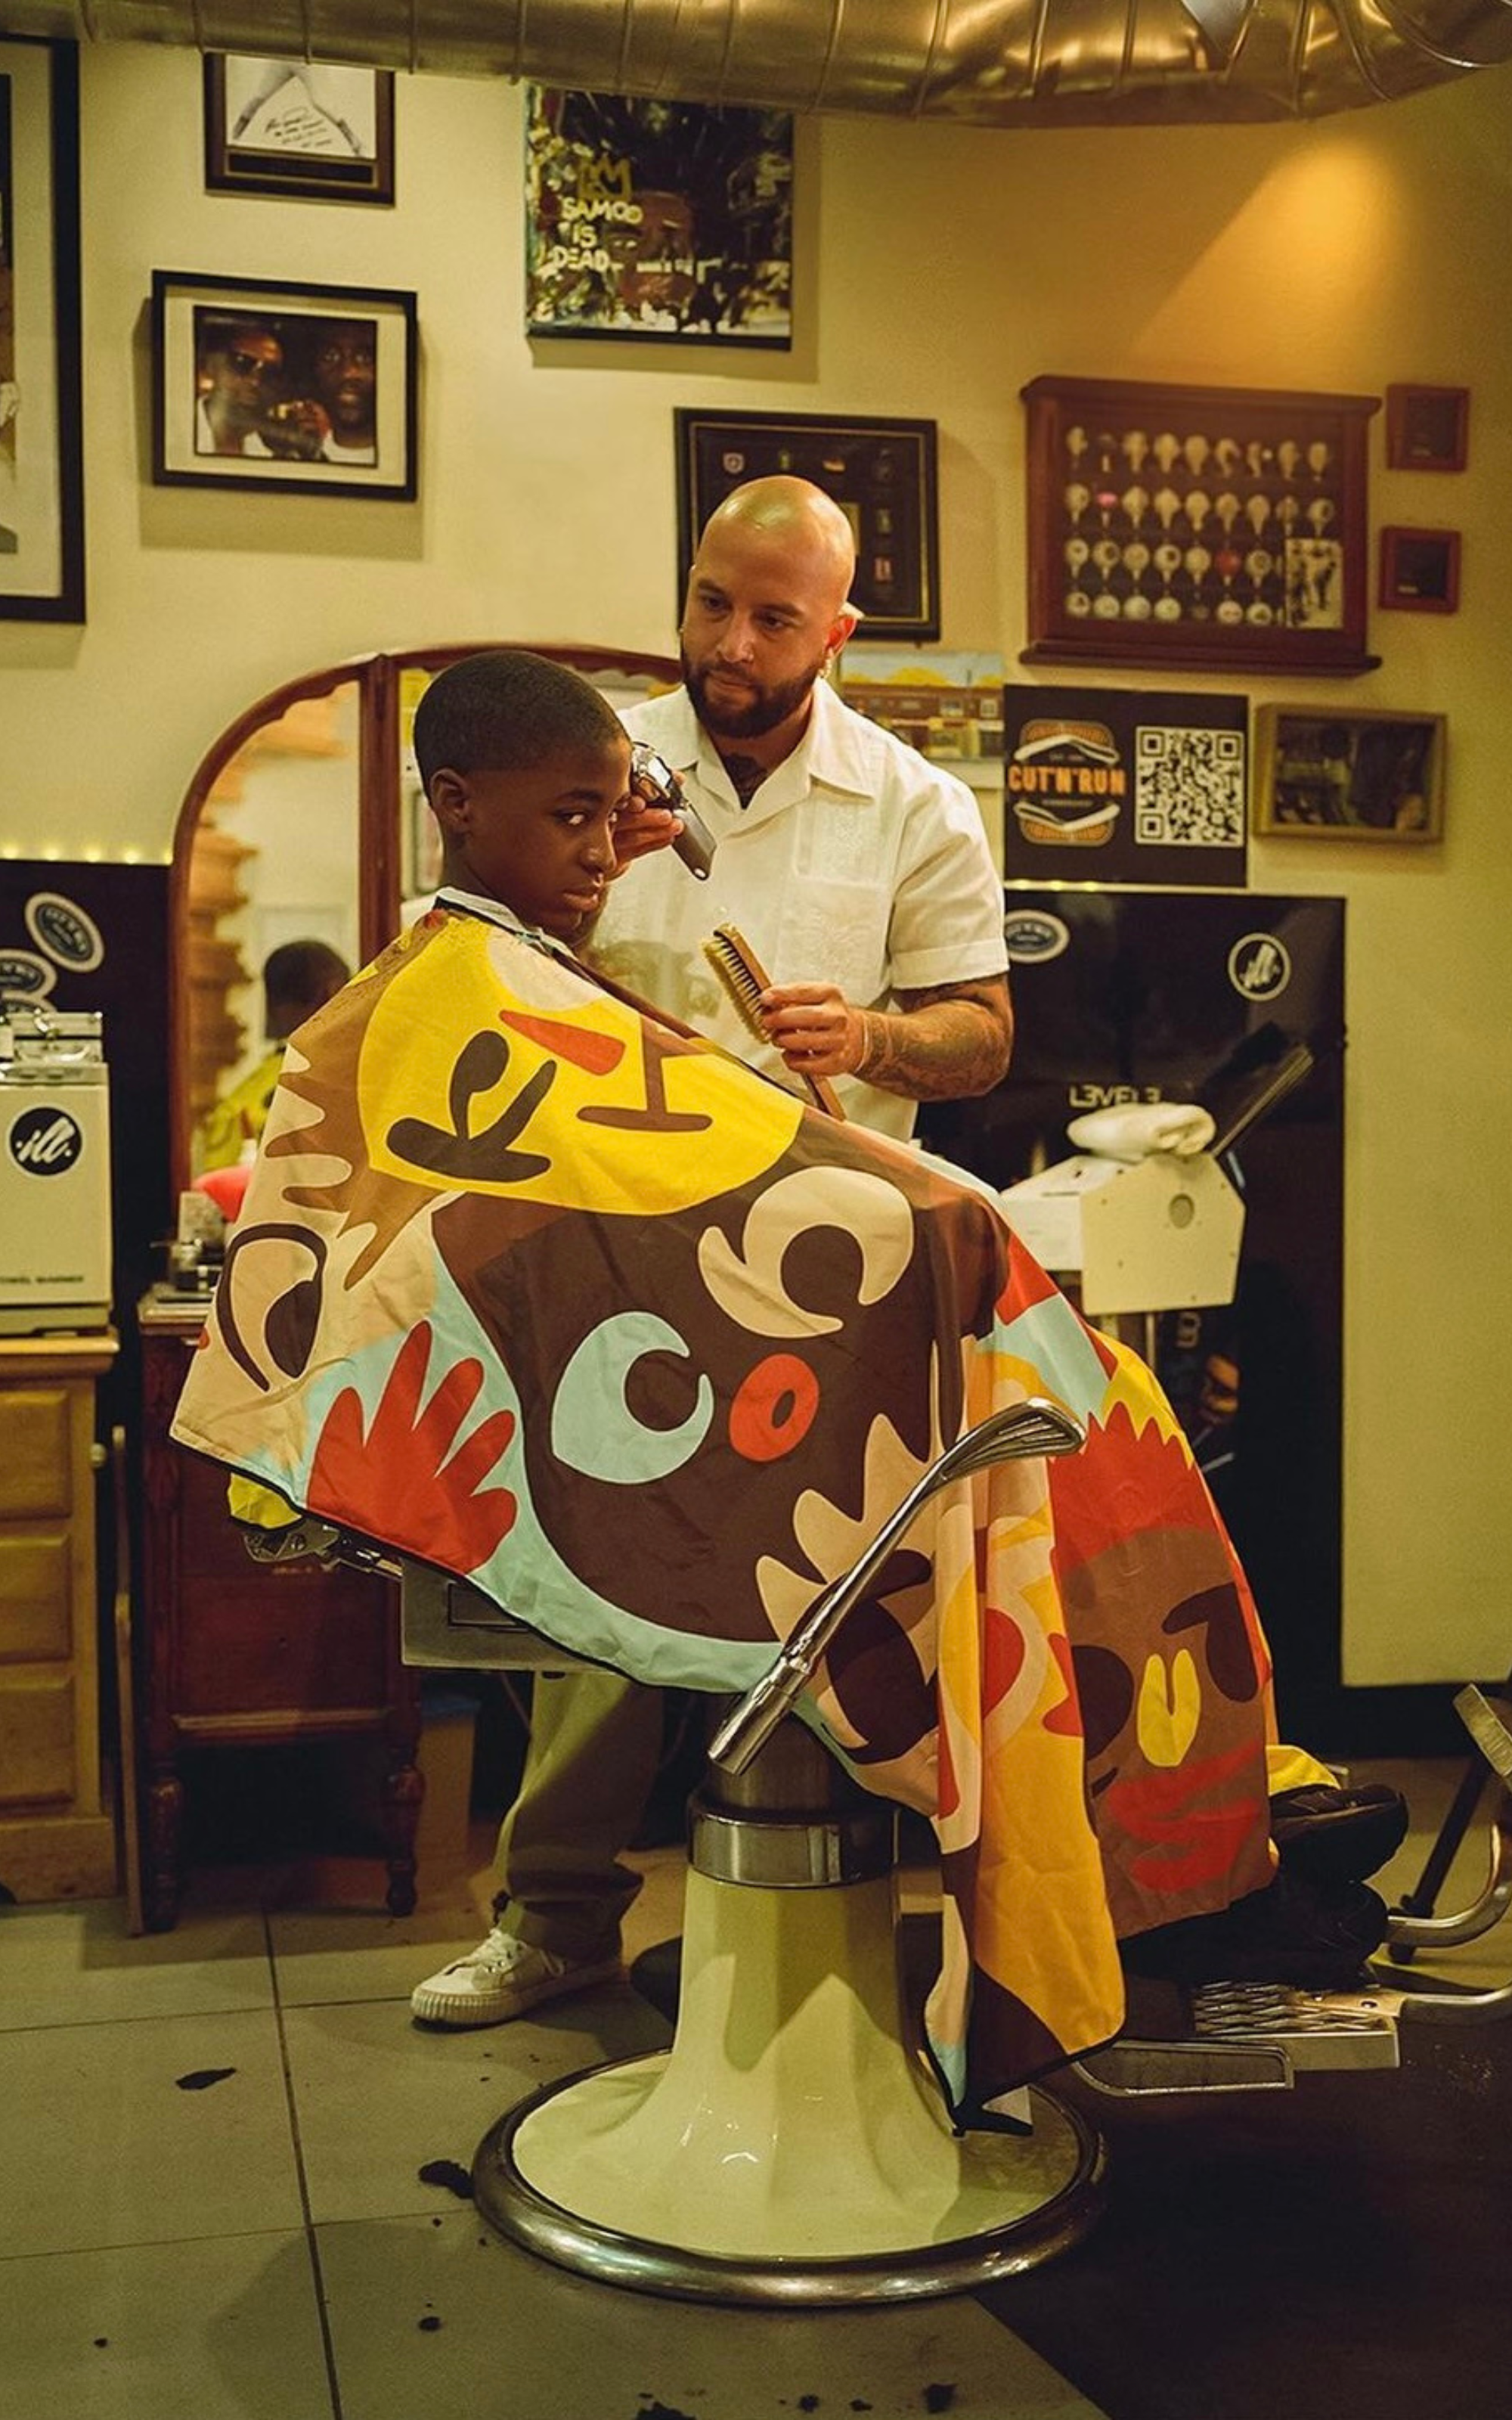 Barber Cape High Quality Professional Barber Cape 